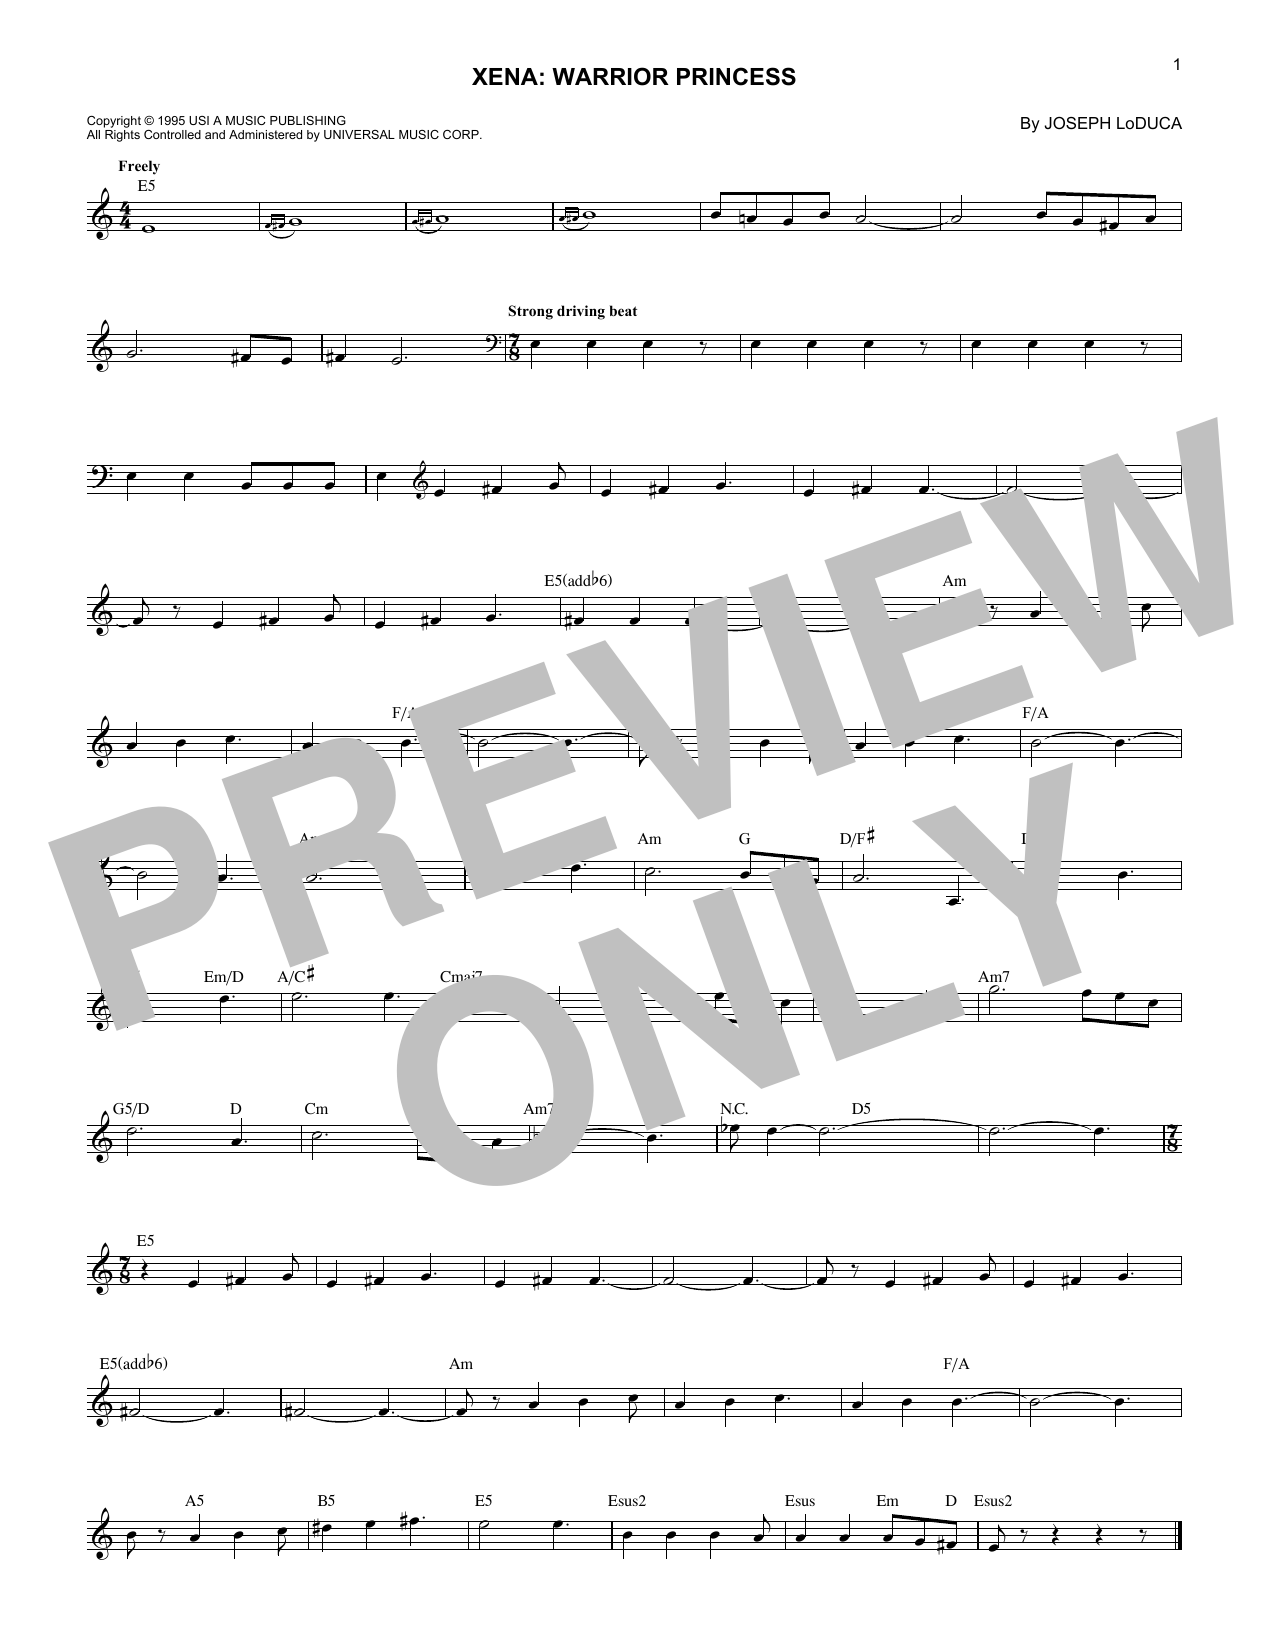 Joseph LoDuca Xena: Warrior Princess Sheet Music Notes & Chords for Melody Line, Lyrics & Chords - Download or Print PDF